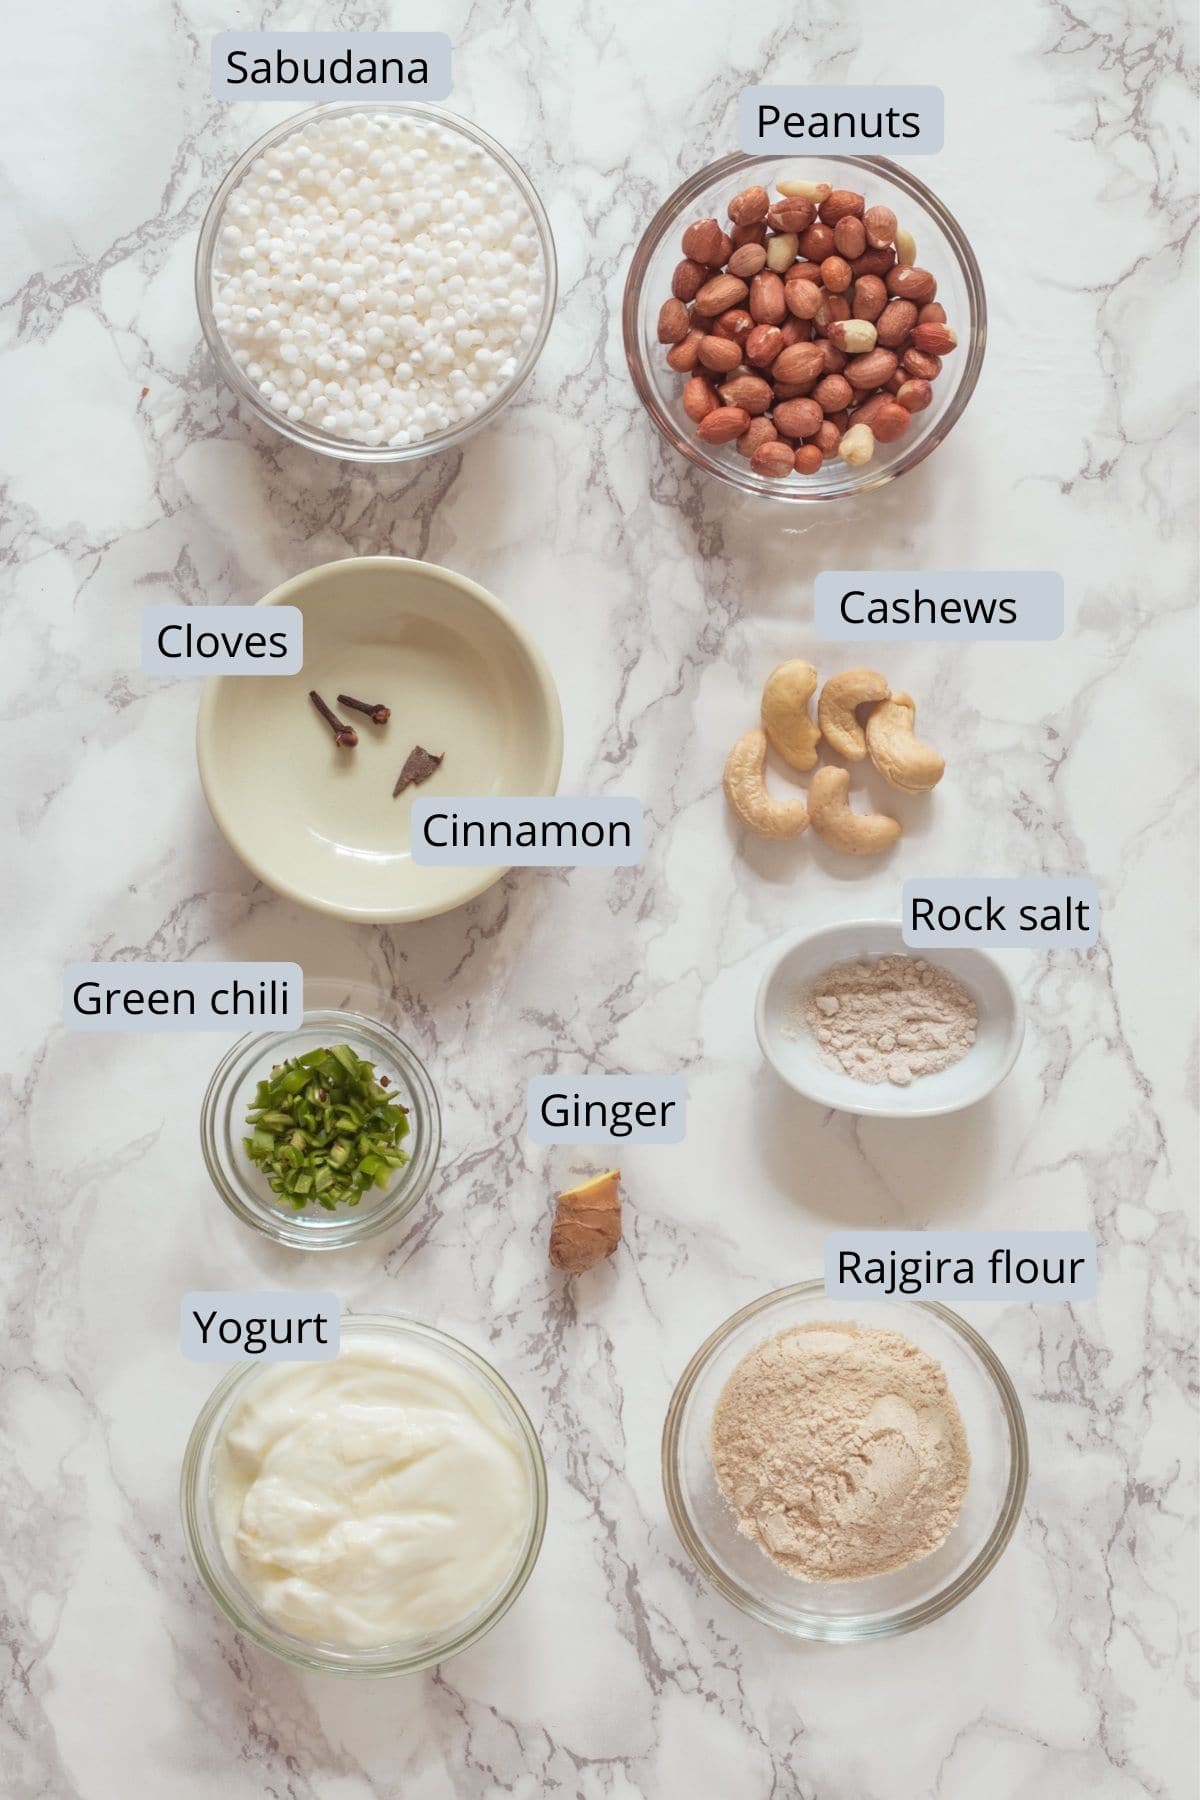 ingredients used in sabudana pakoda includes tapioca, peanuts. salt. cashews. cloves, cinnamon, green chilies, yogurt, rajgira atta.